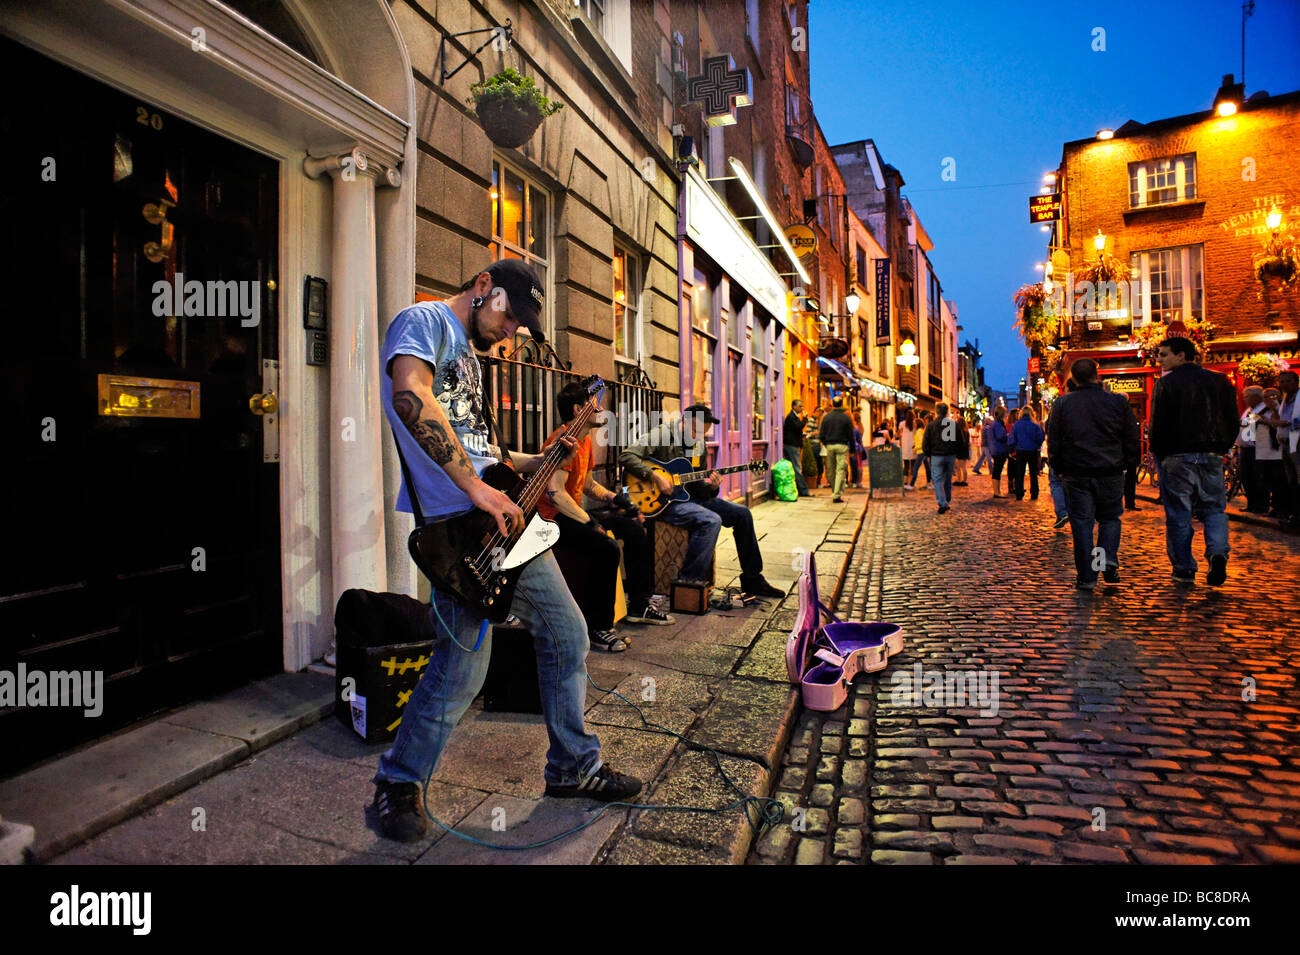 Banda busking en calle adoquinada de la zona de vida nocturna de Temple Bar Dublín, República de Irlanda Foto de stock